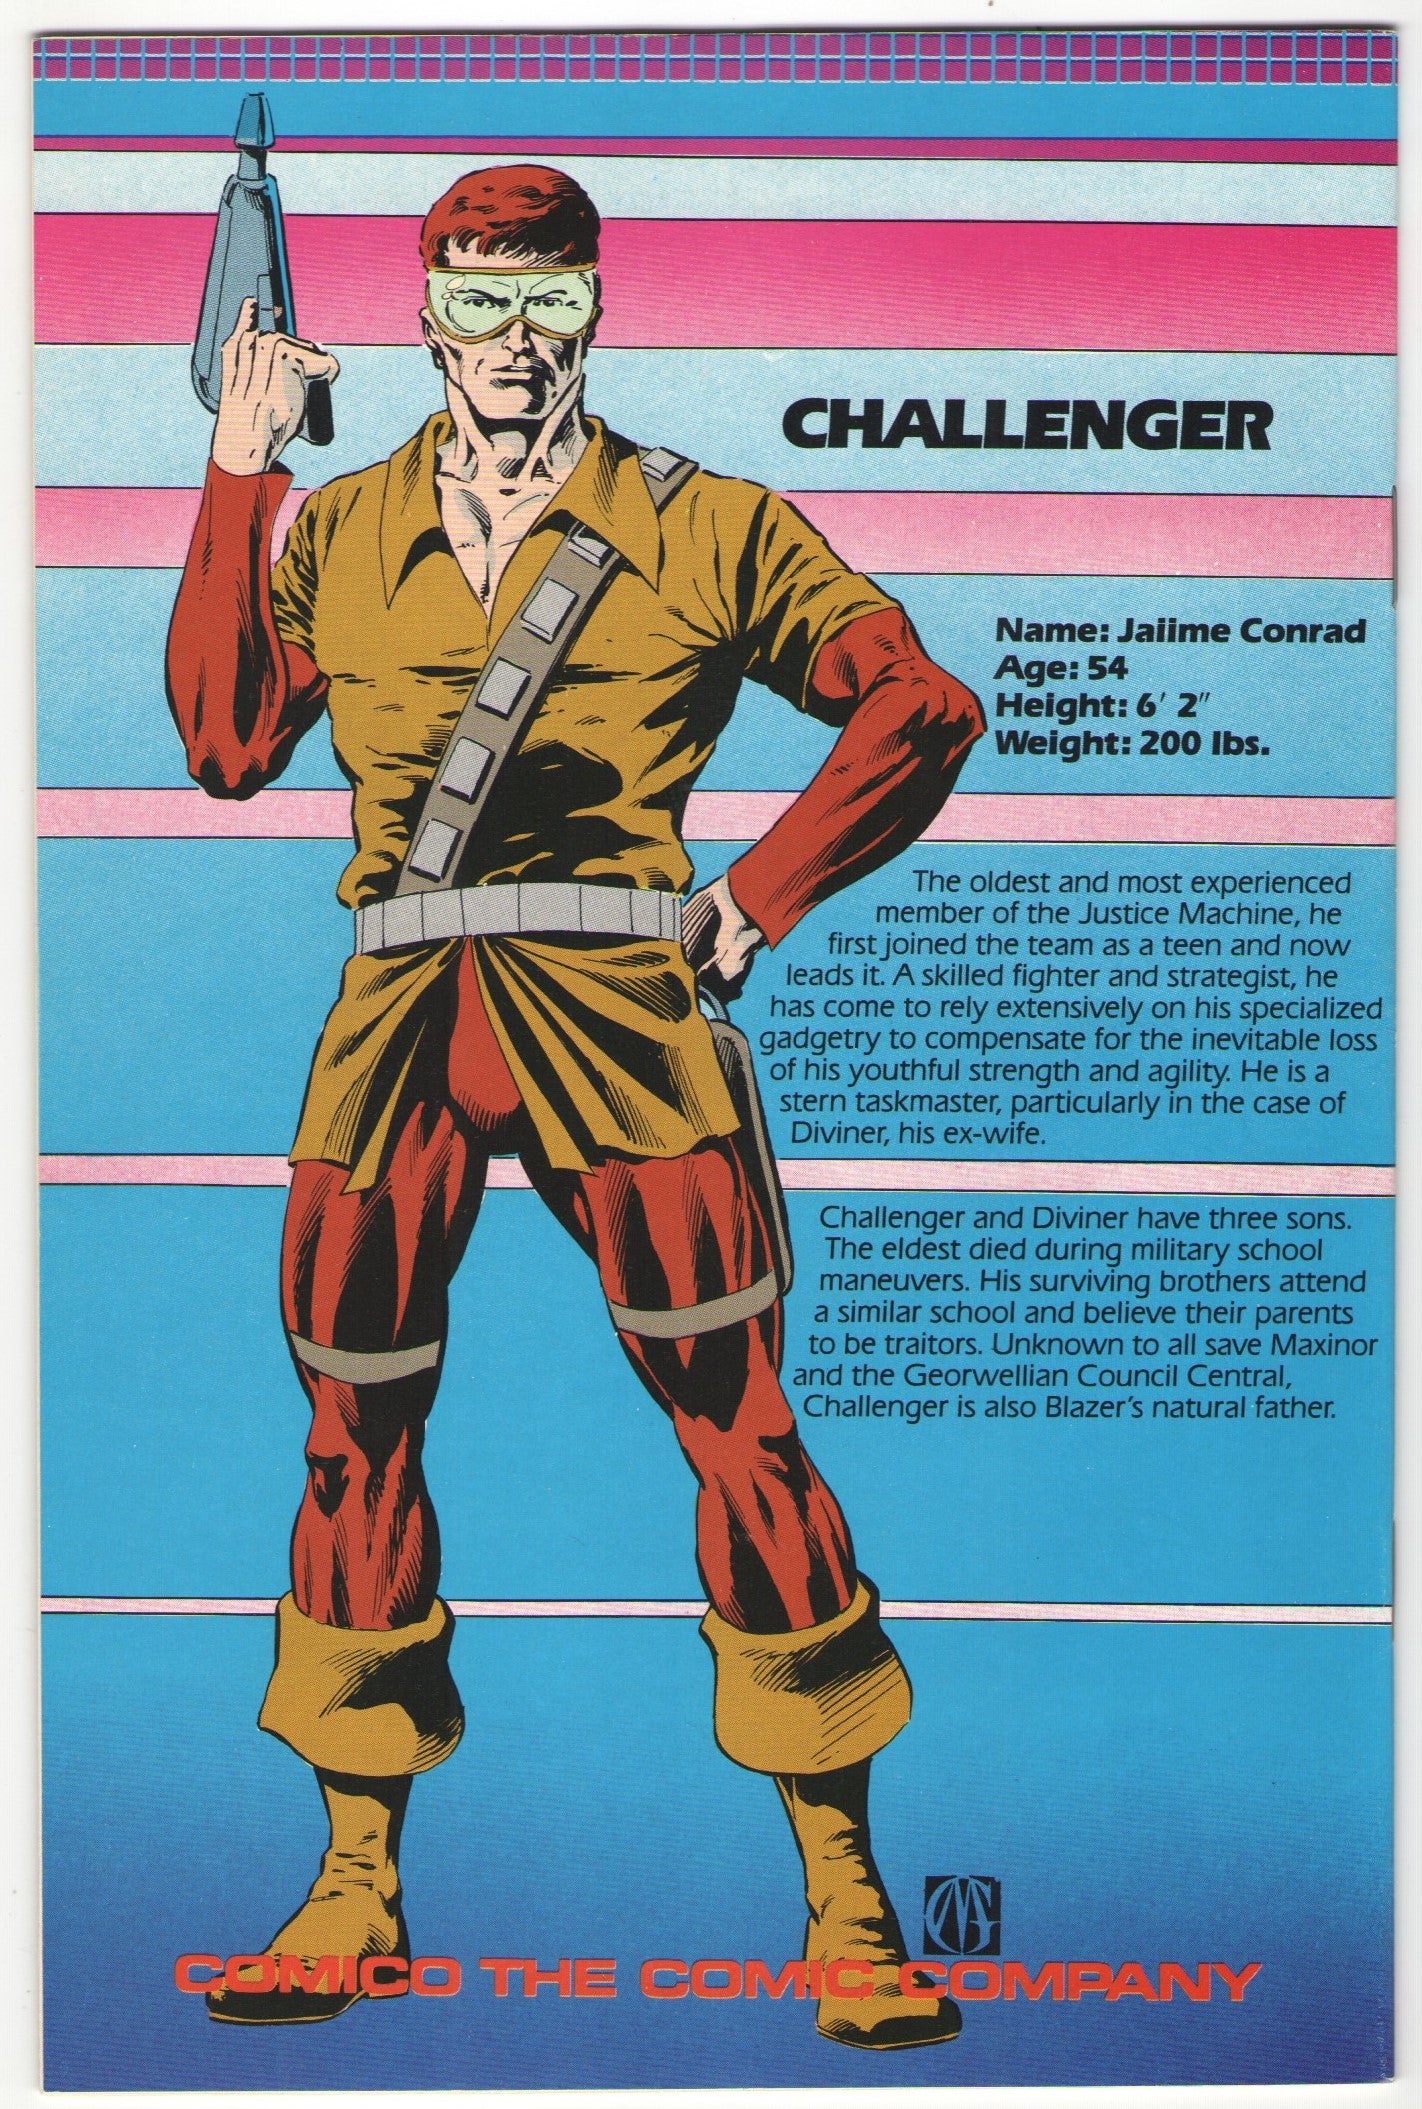 Justice Machine #8 (1987)